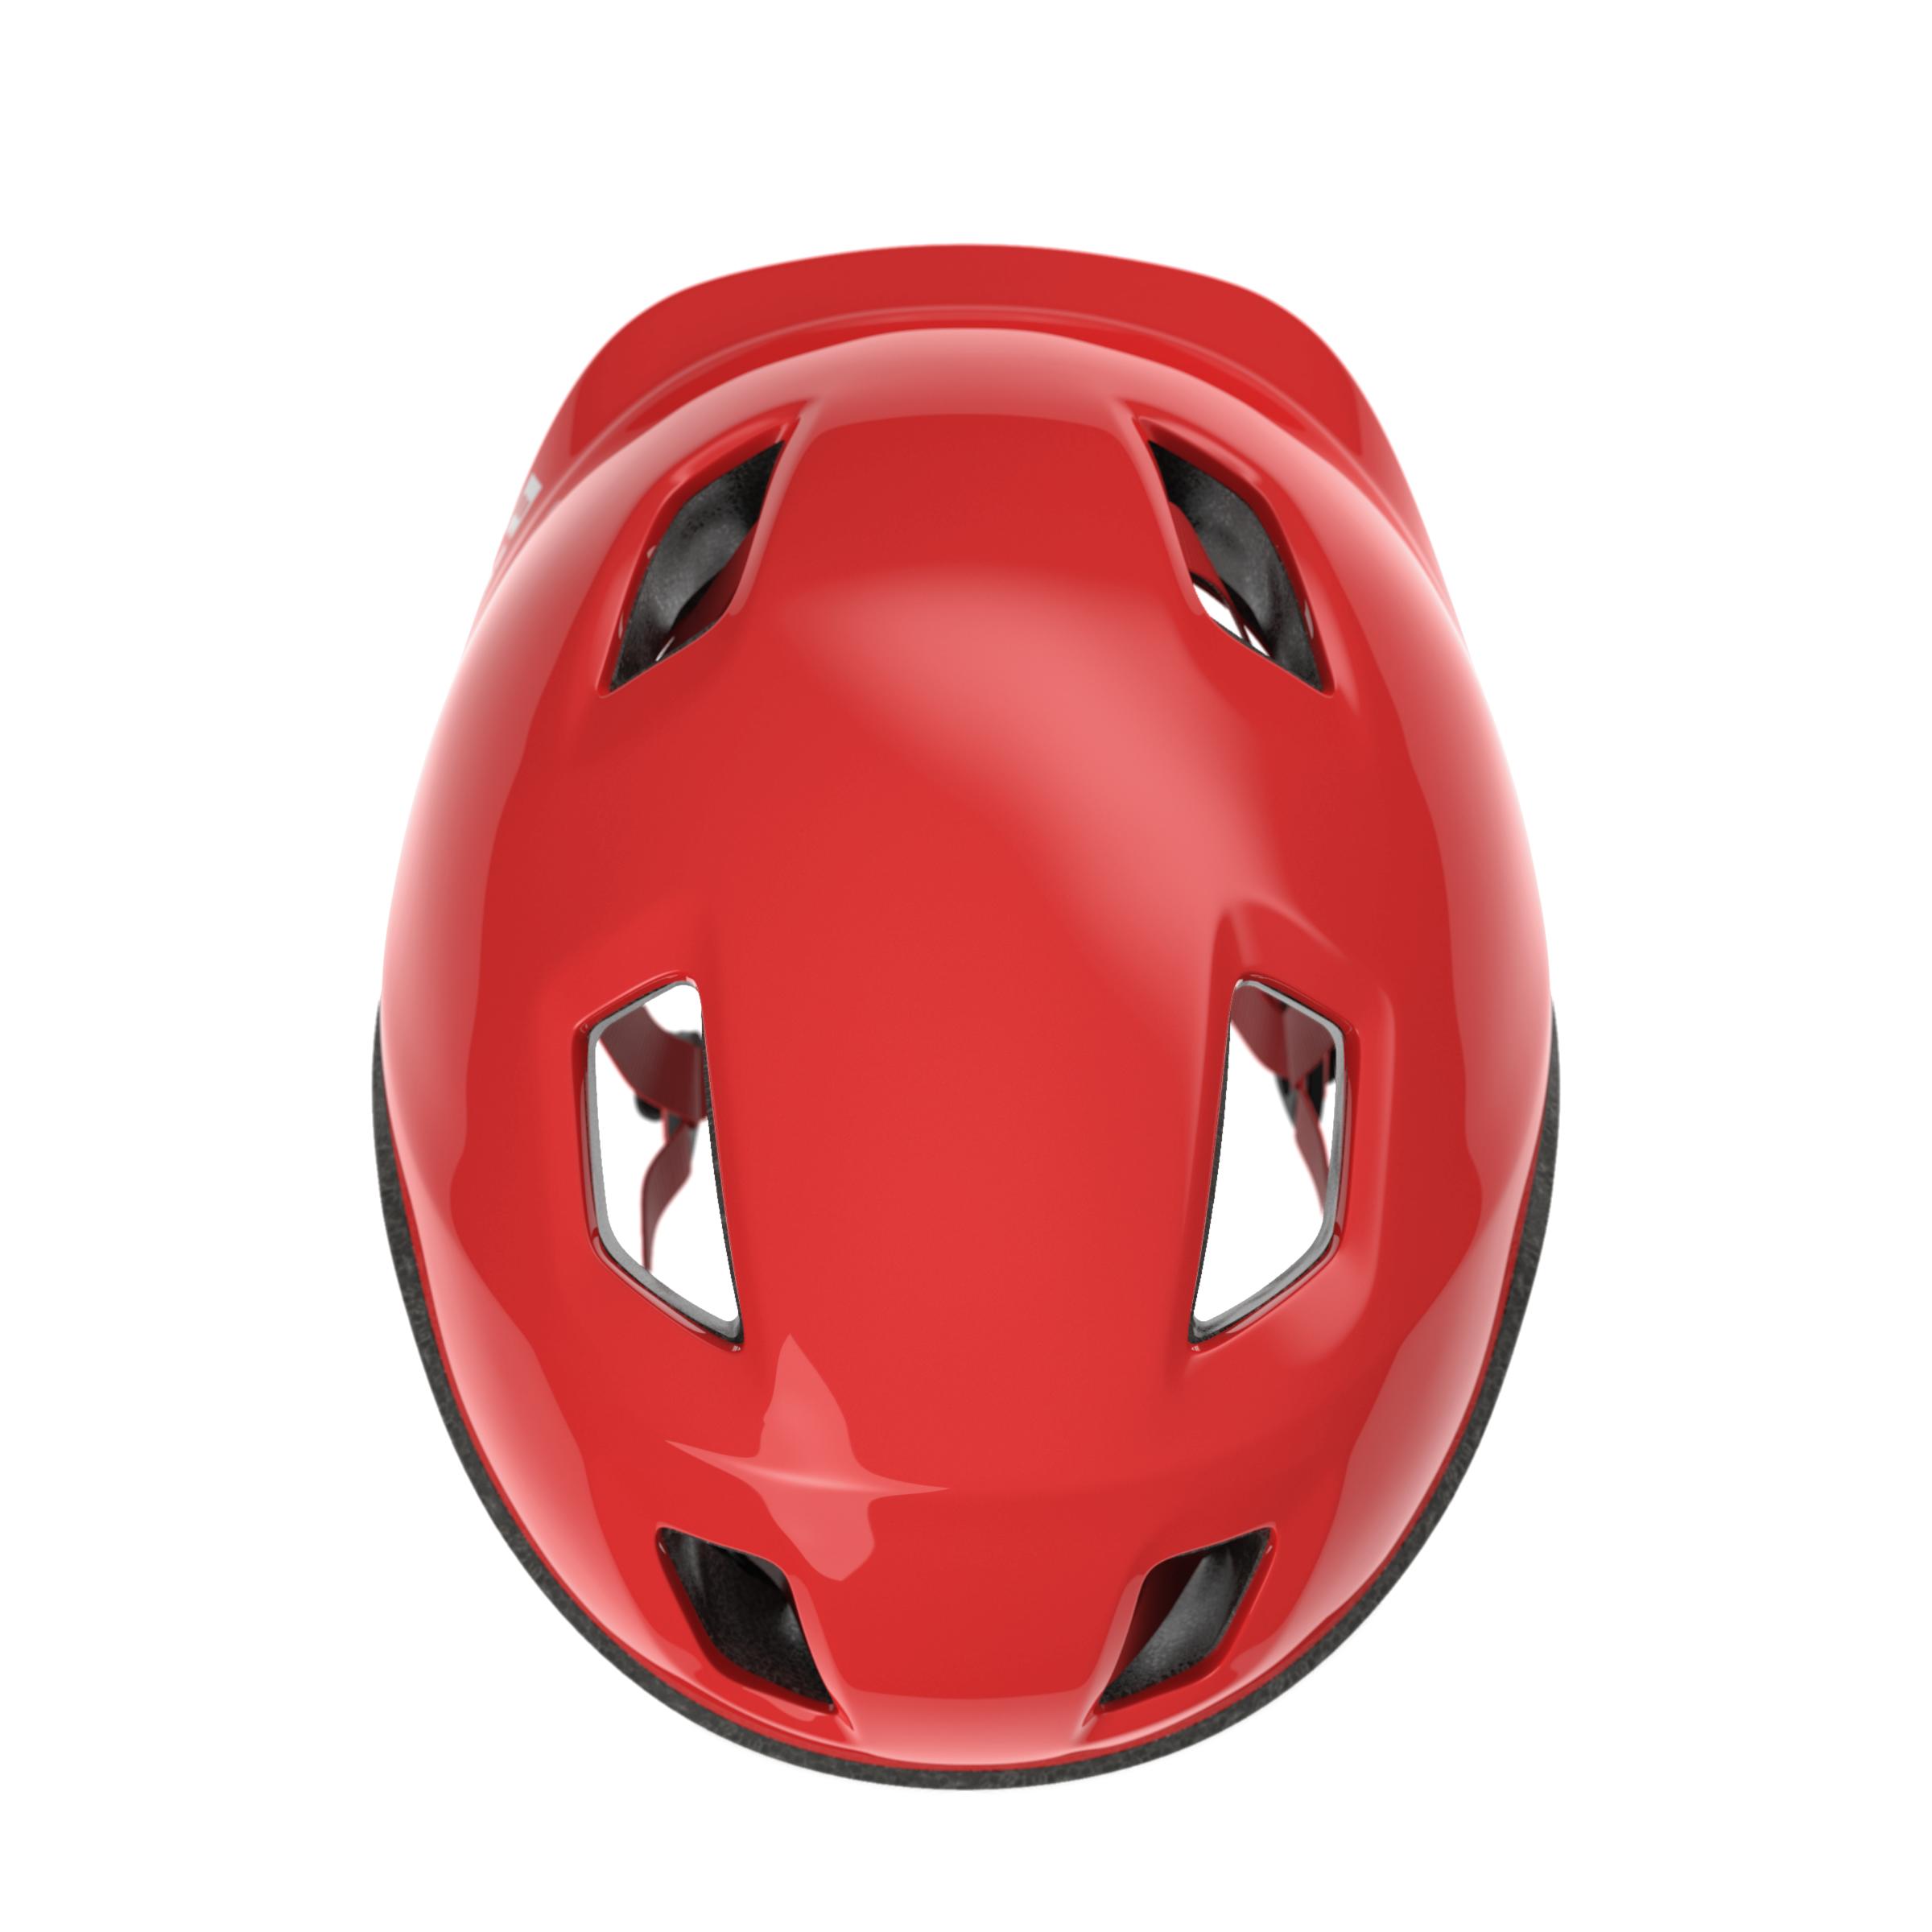 decathlon child helmet